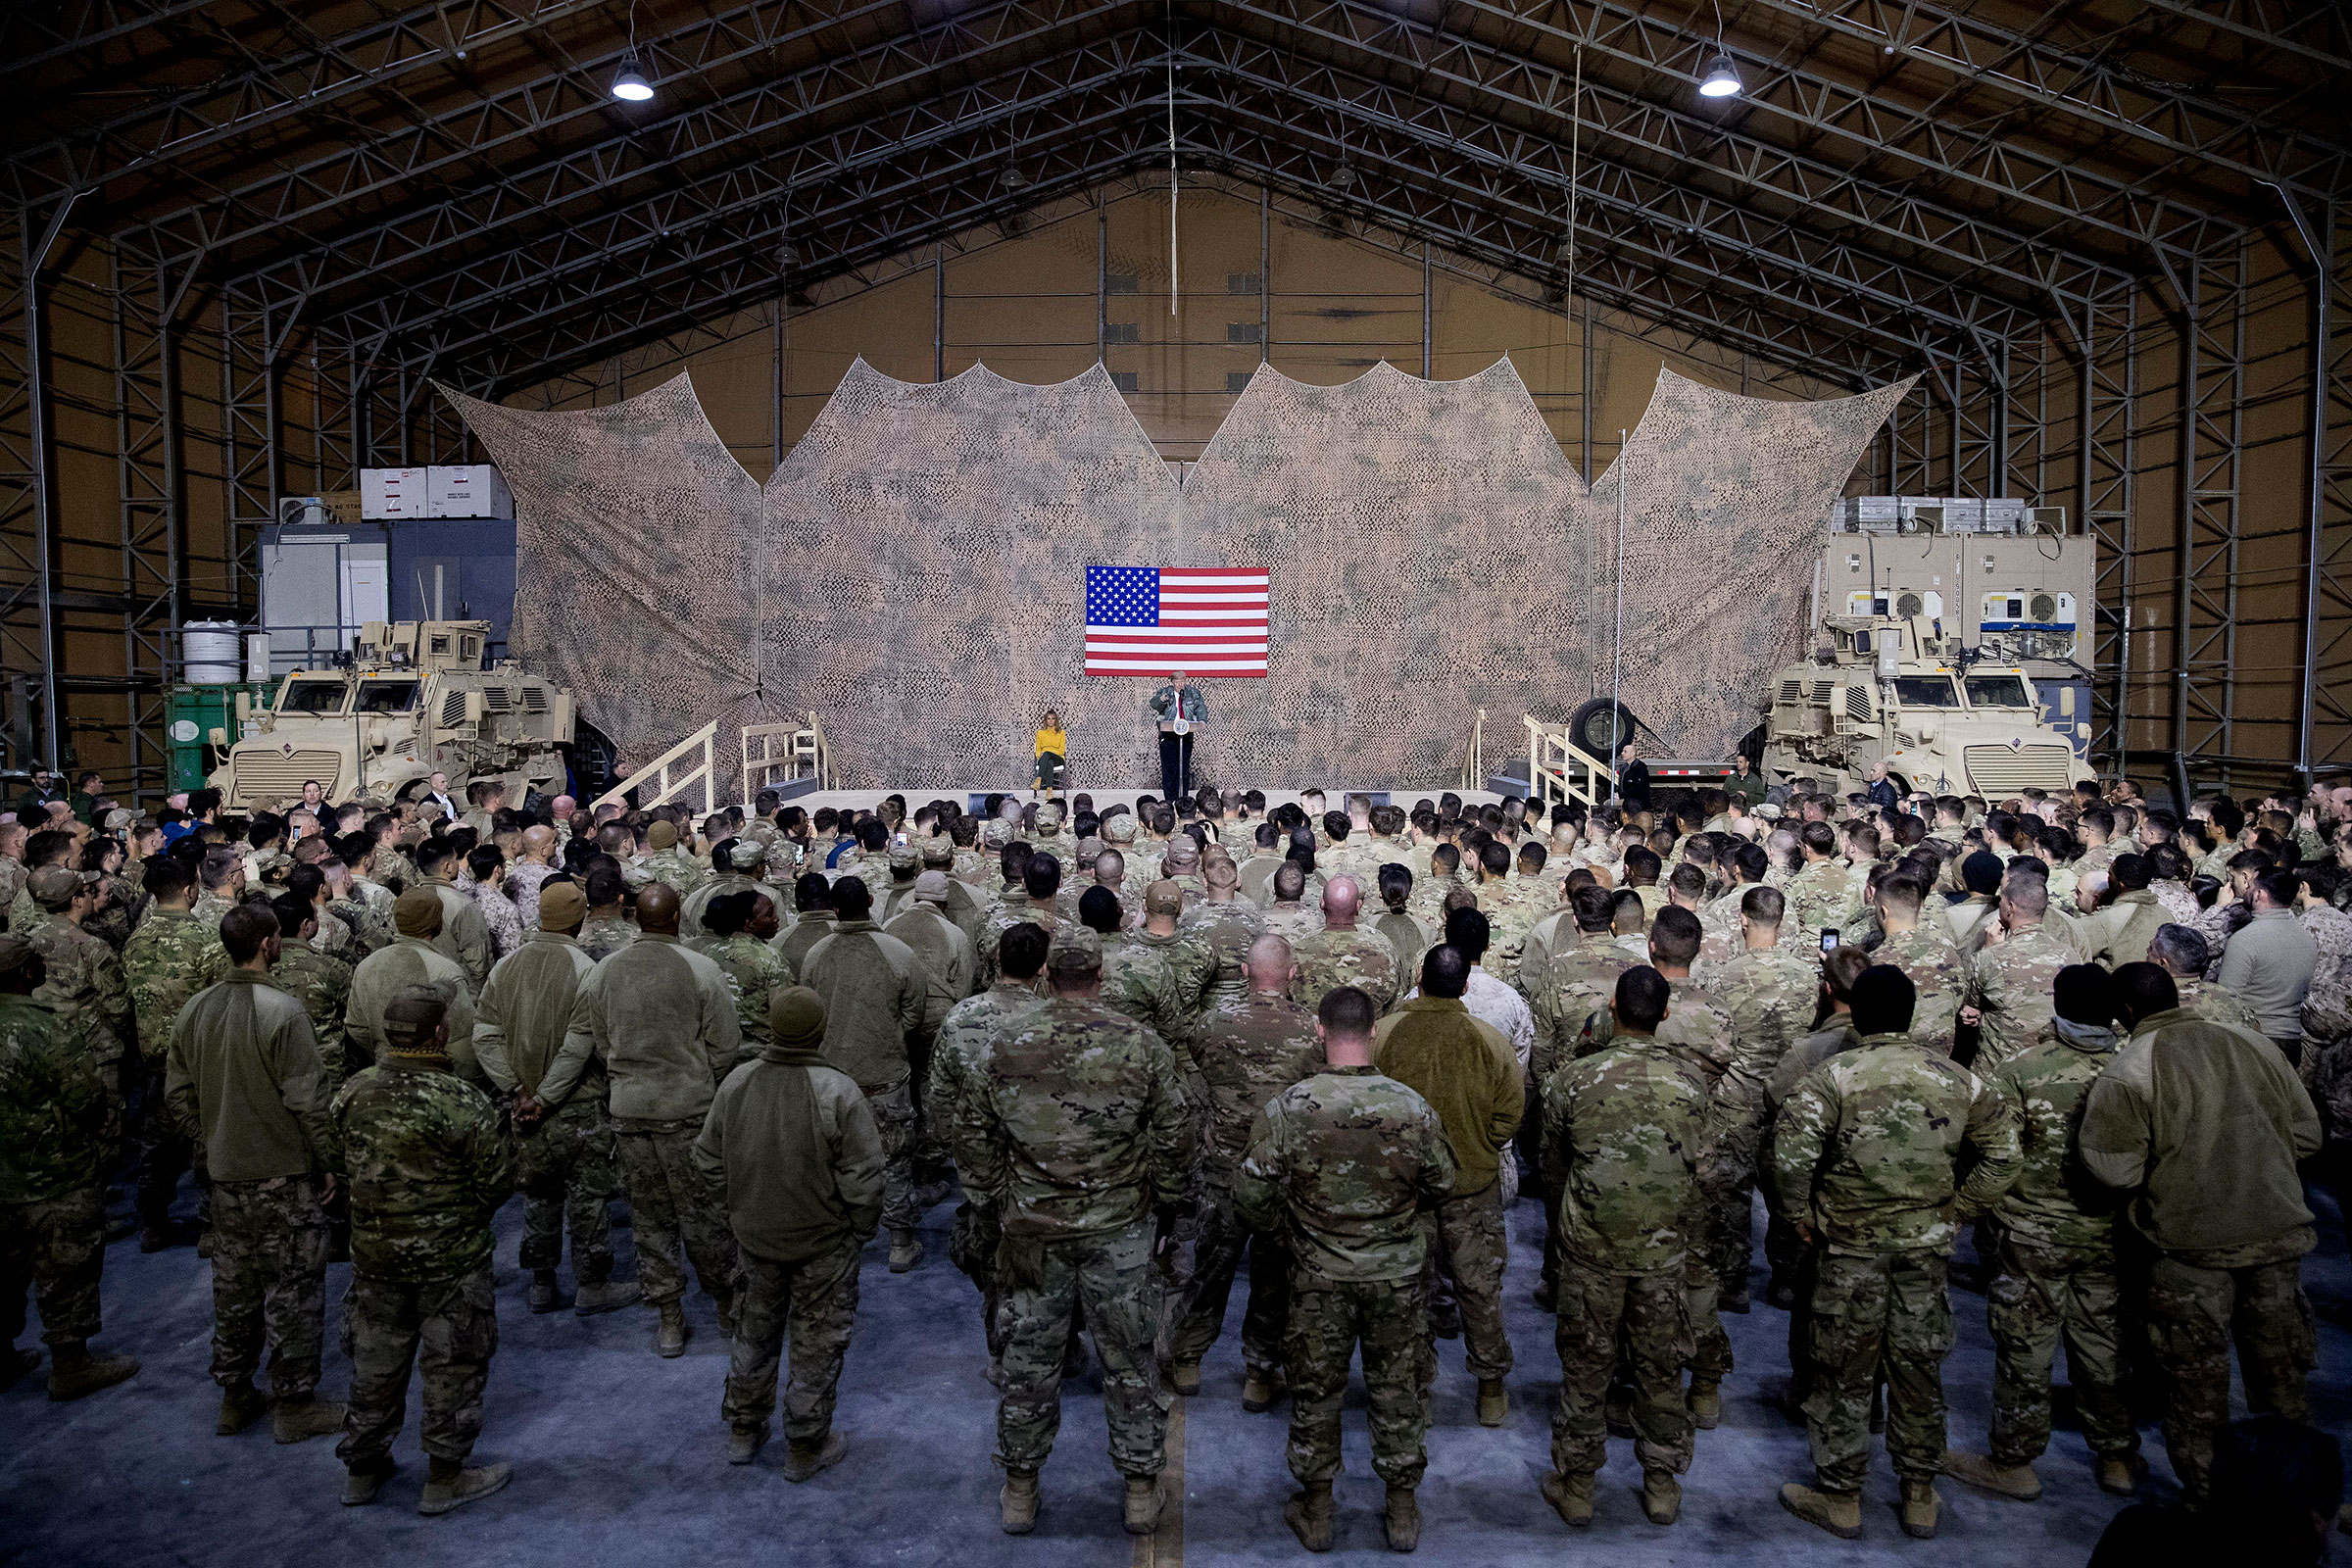 President Trump speaks at a rally in a hangar at Al Asad Air Base, Iraq, on Dec. 26, 2018